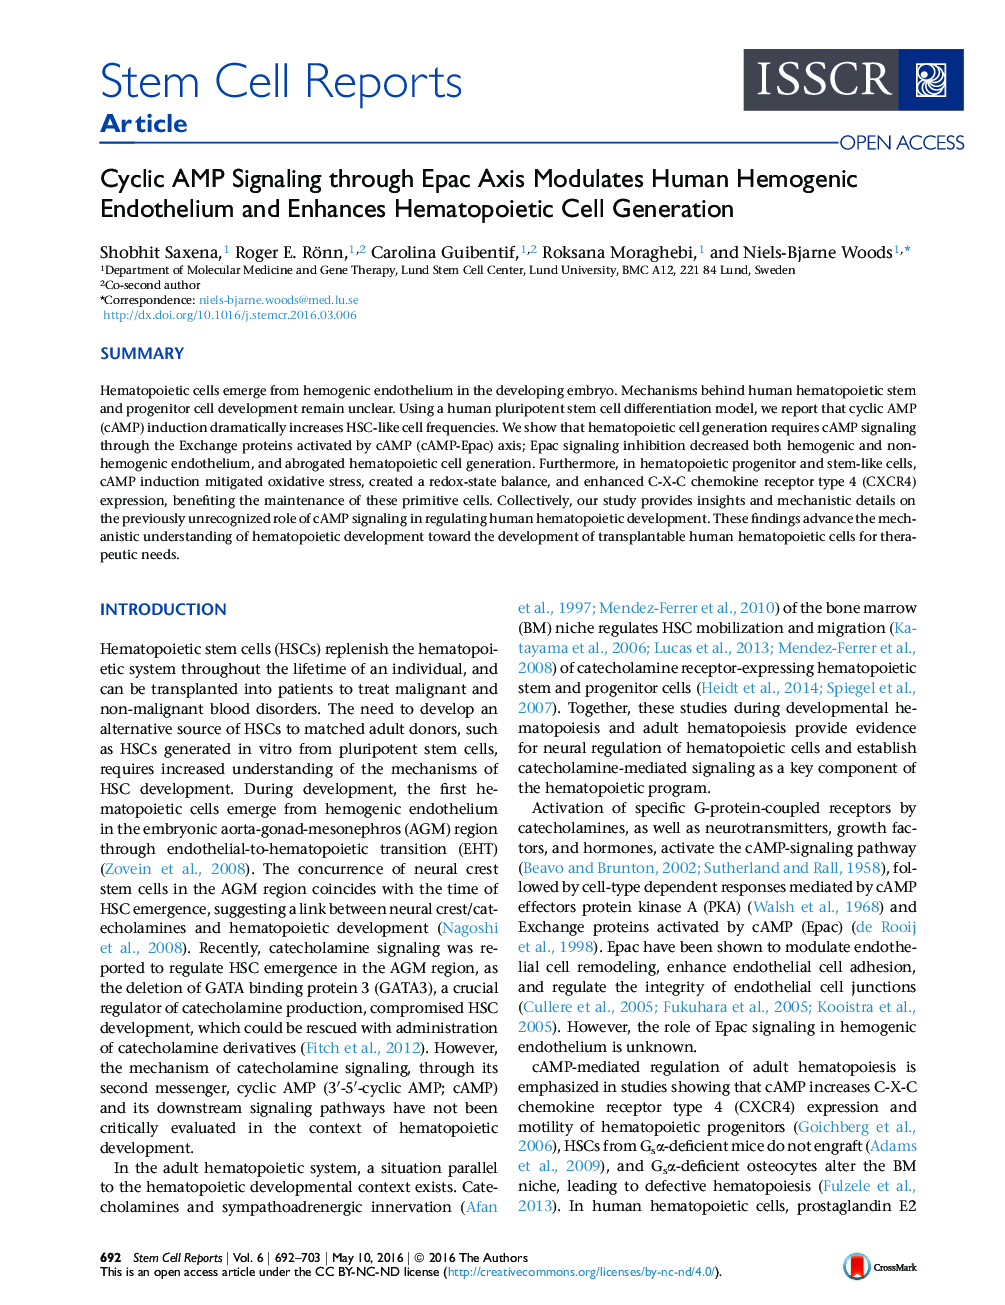 Cyclic AMP Signaling through Epac Axis Modulates Human Hemogenic Endothelium and Enhances Hematopoietic Cell Generation